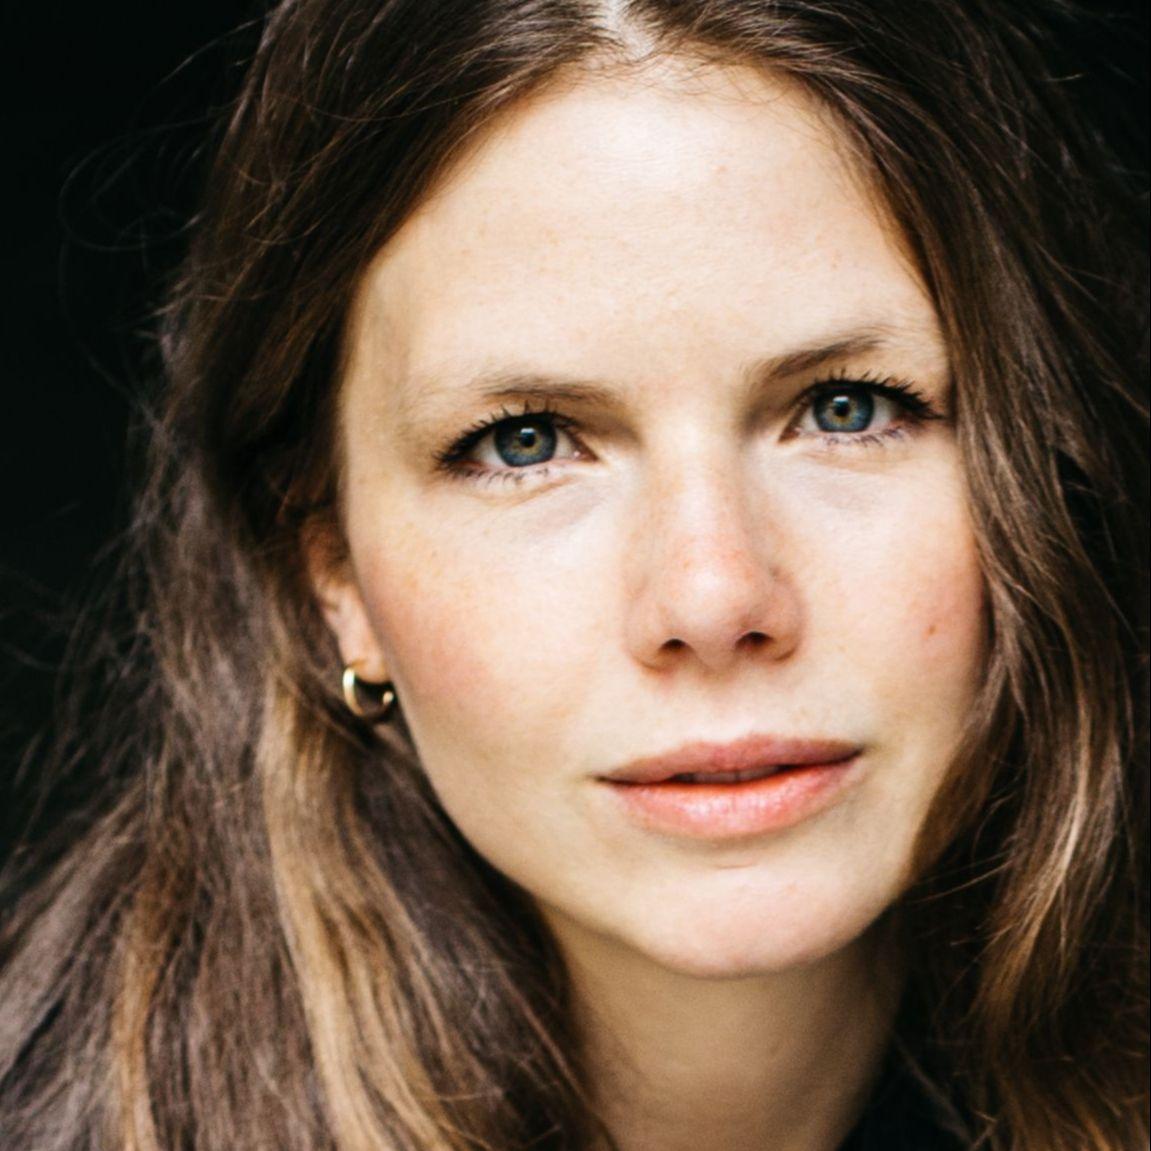 Profile Photo of Leonie Rainer by Lenja Kempf